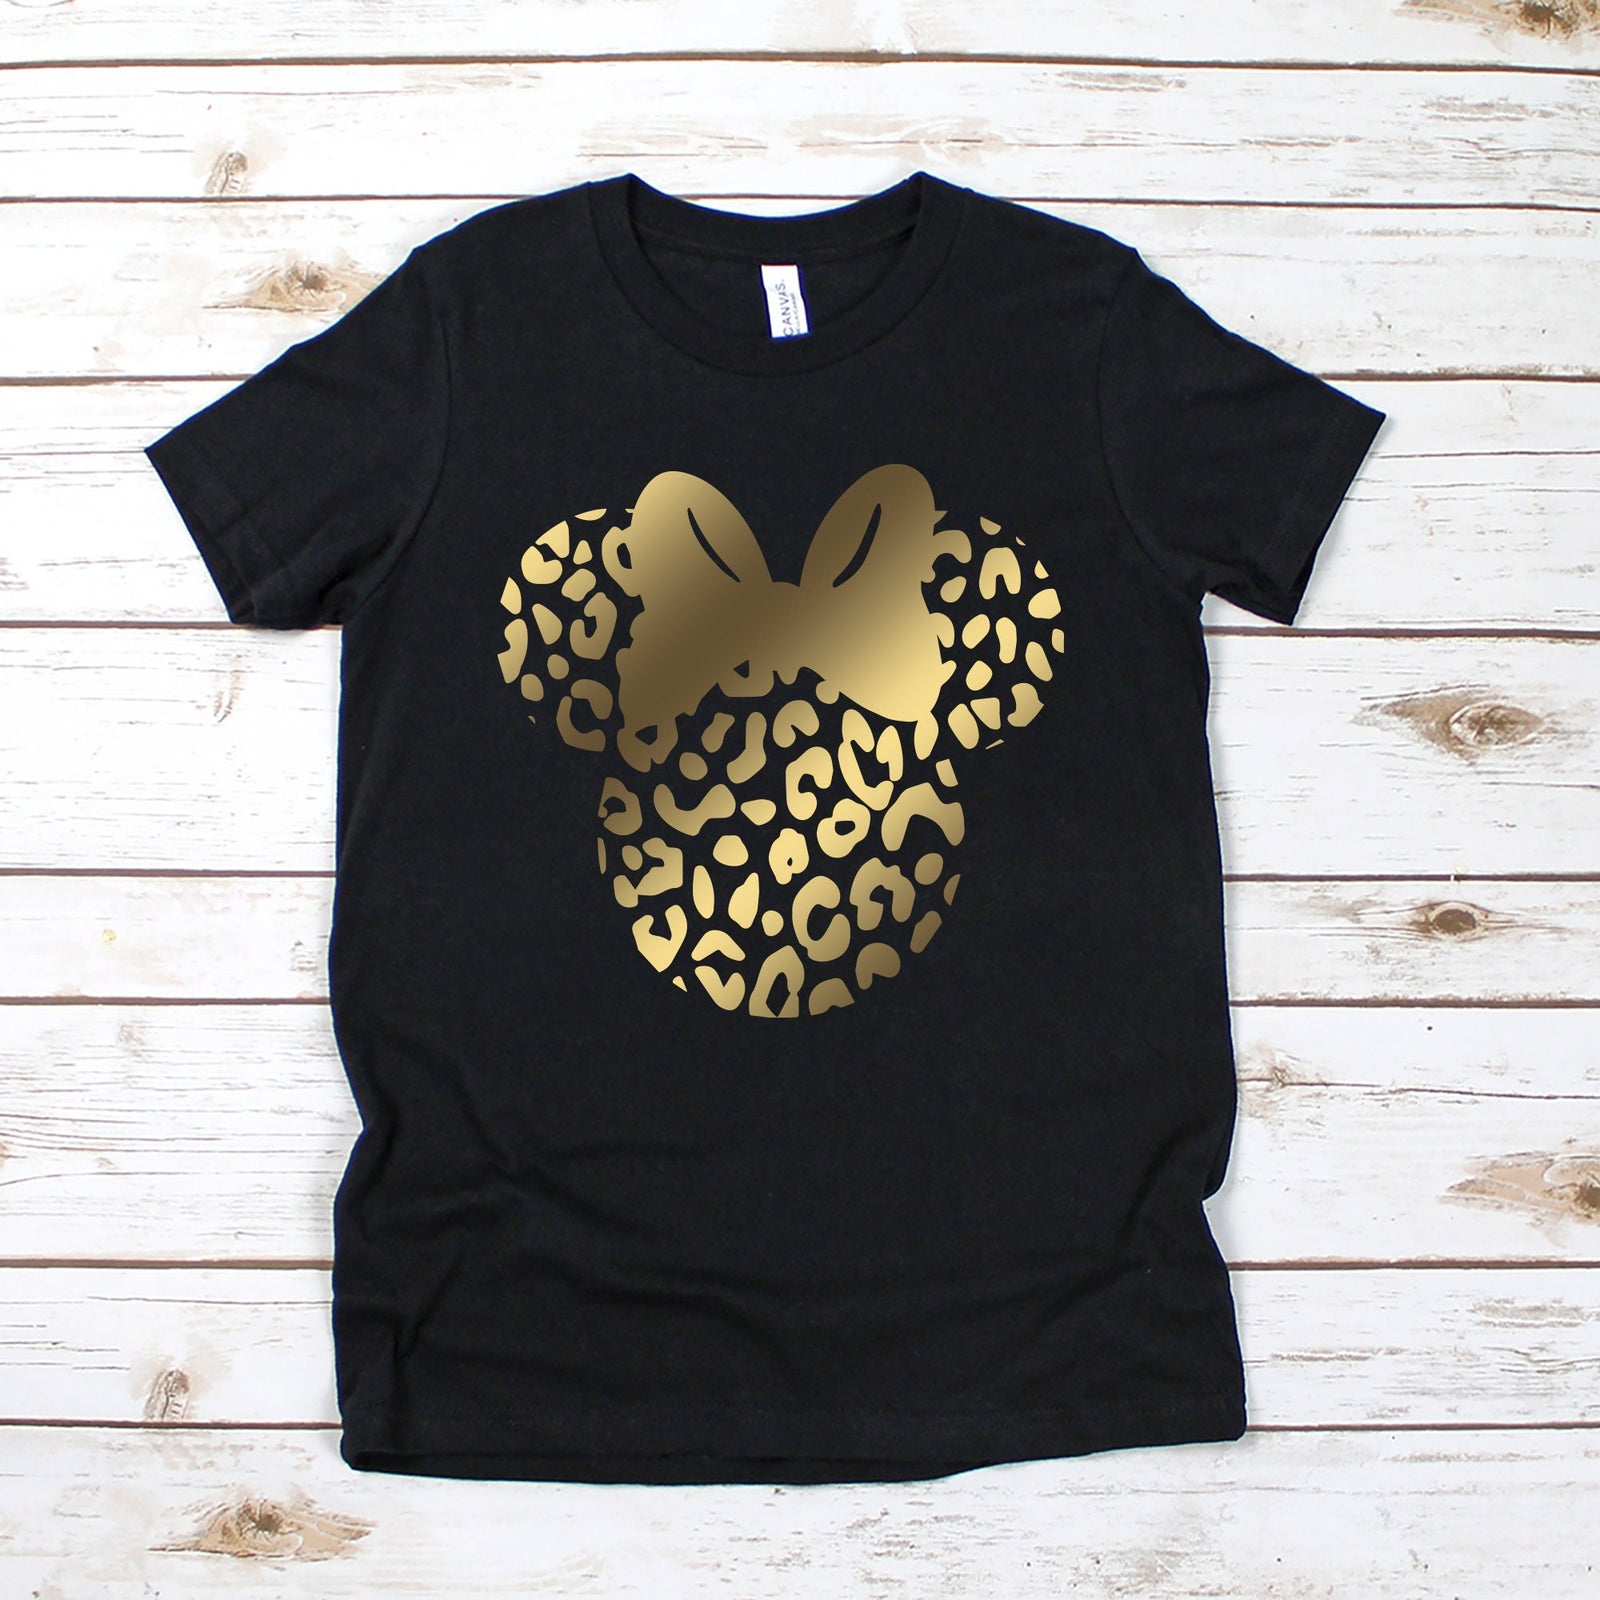 Minnie Mouse Cheetah Leopard Disney T shirt - Youth Kids Animal Kingdom Shirt -Disney Matching Family Safari Shirts - Animal Print